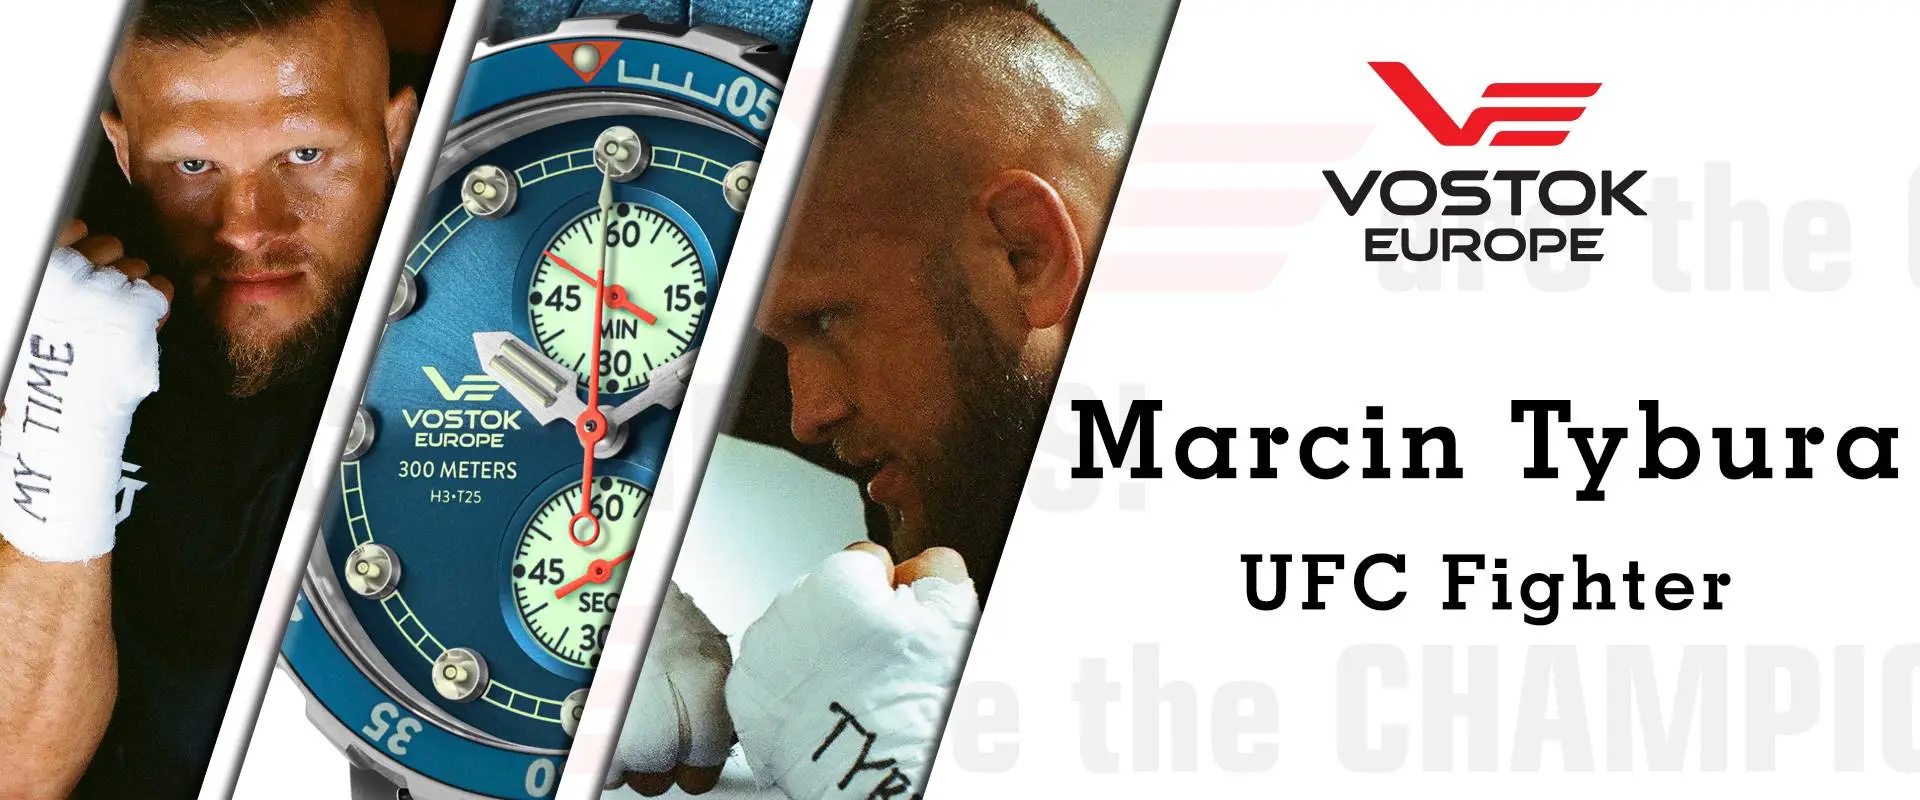 Marcin Tybura - Ambasador marki Vostok Europe na UFC